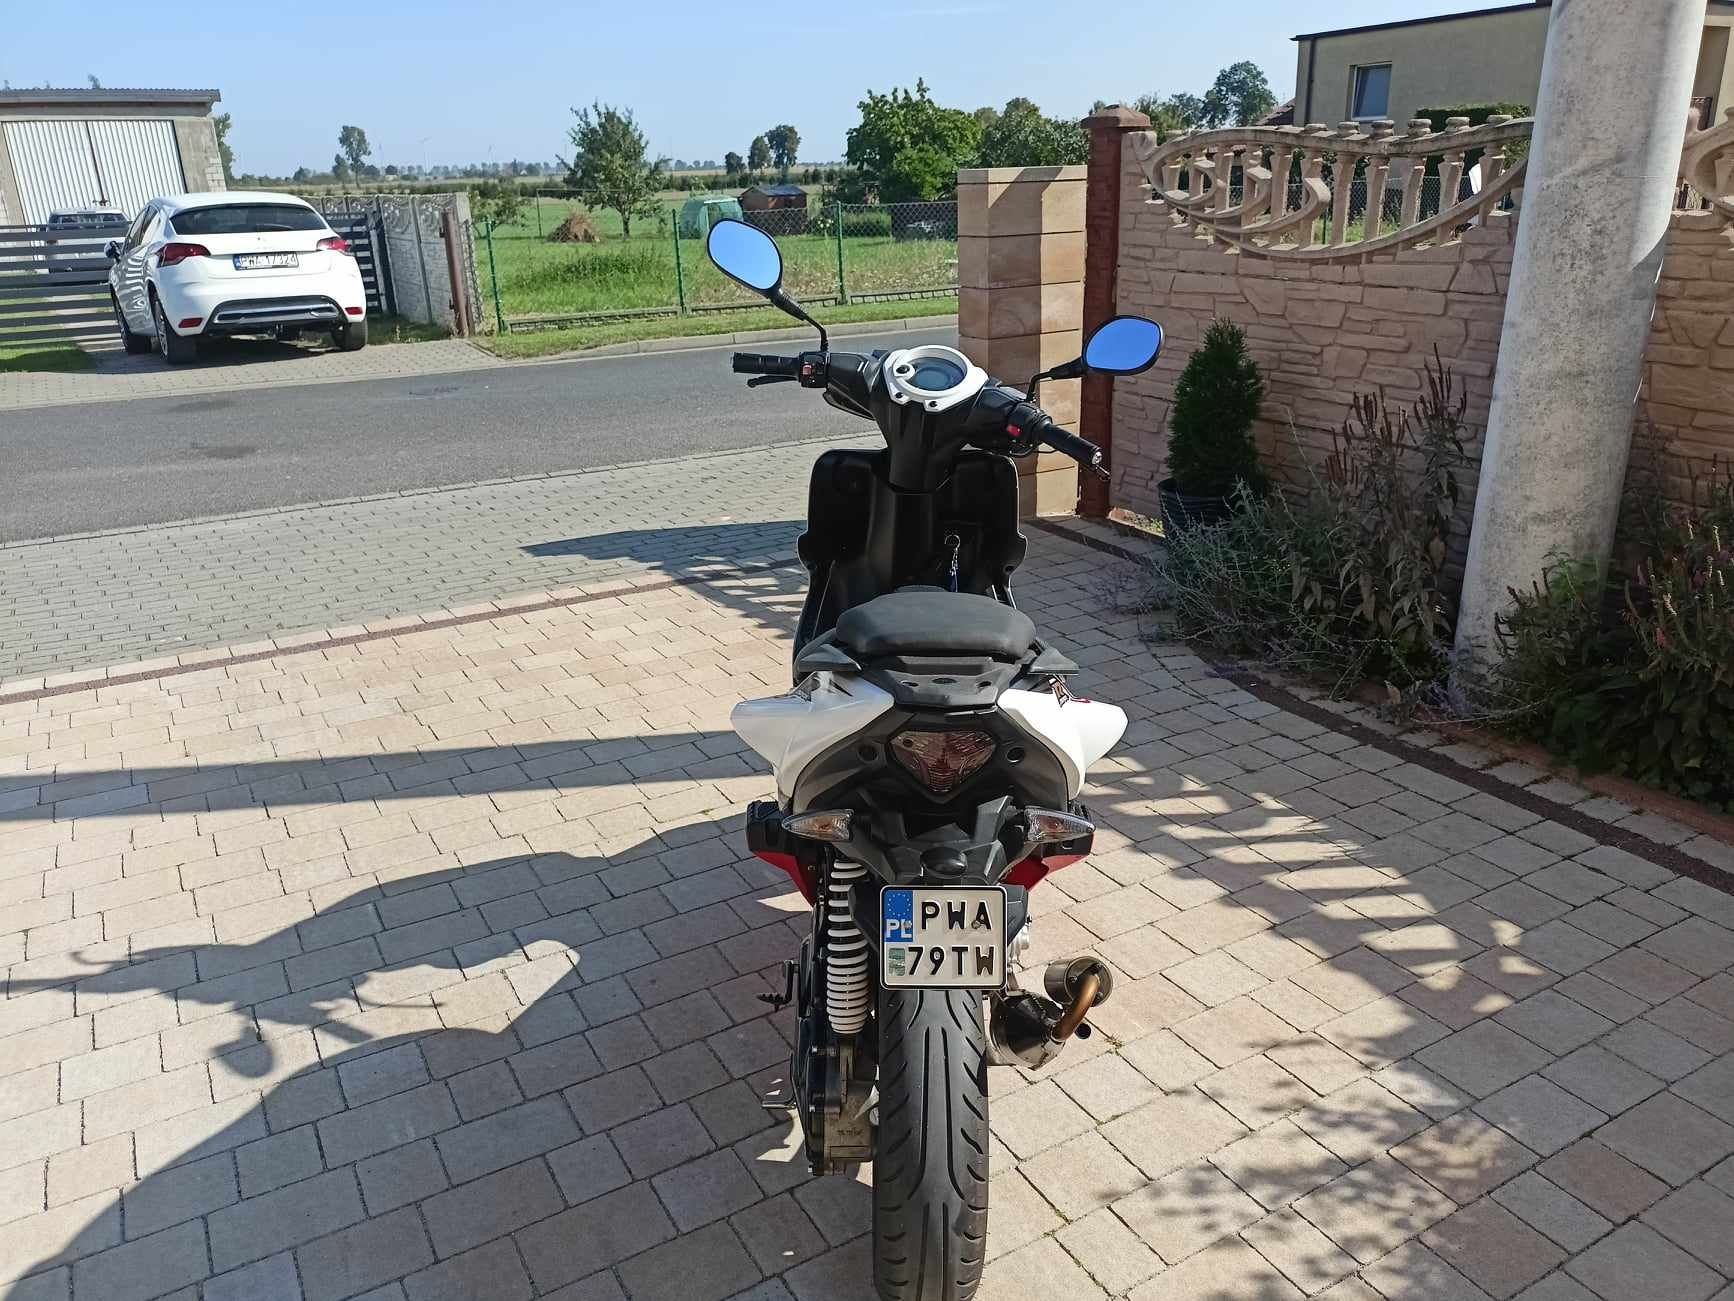 Sprzedam skuter Yamaha aerox